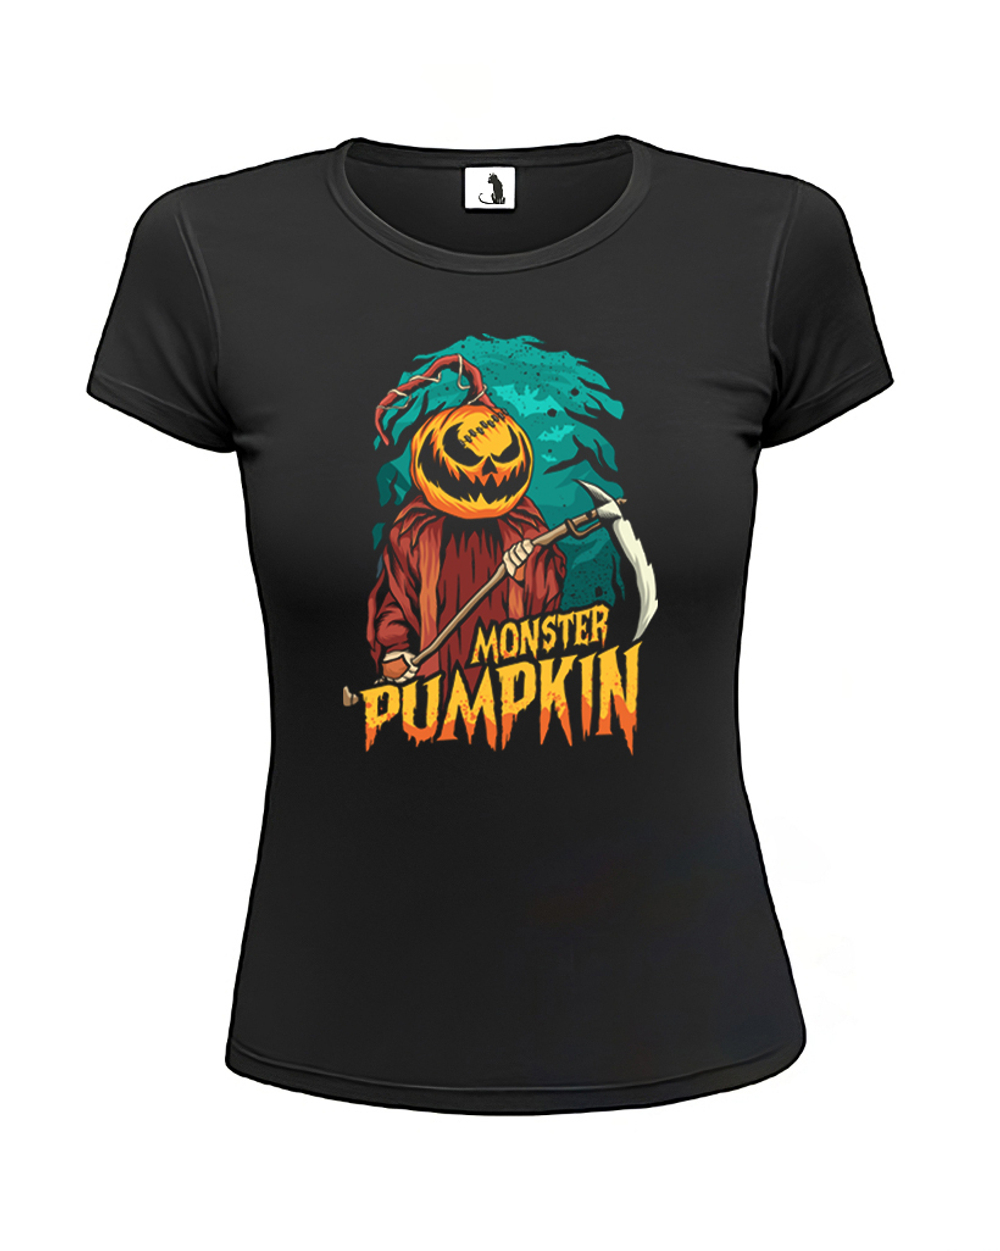 Футболка Monster Pumpkin женская приталенная черная